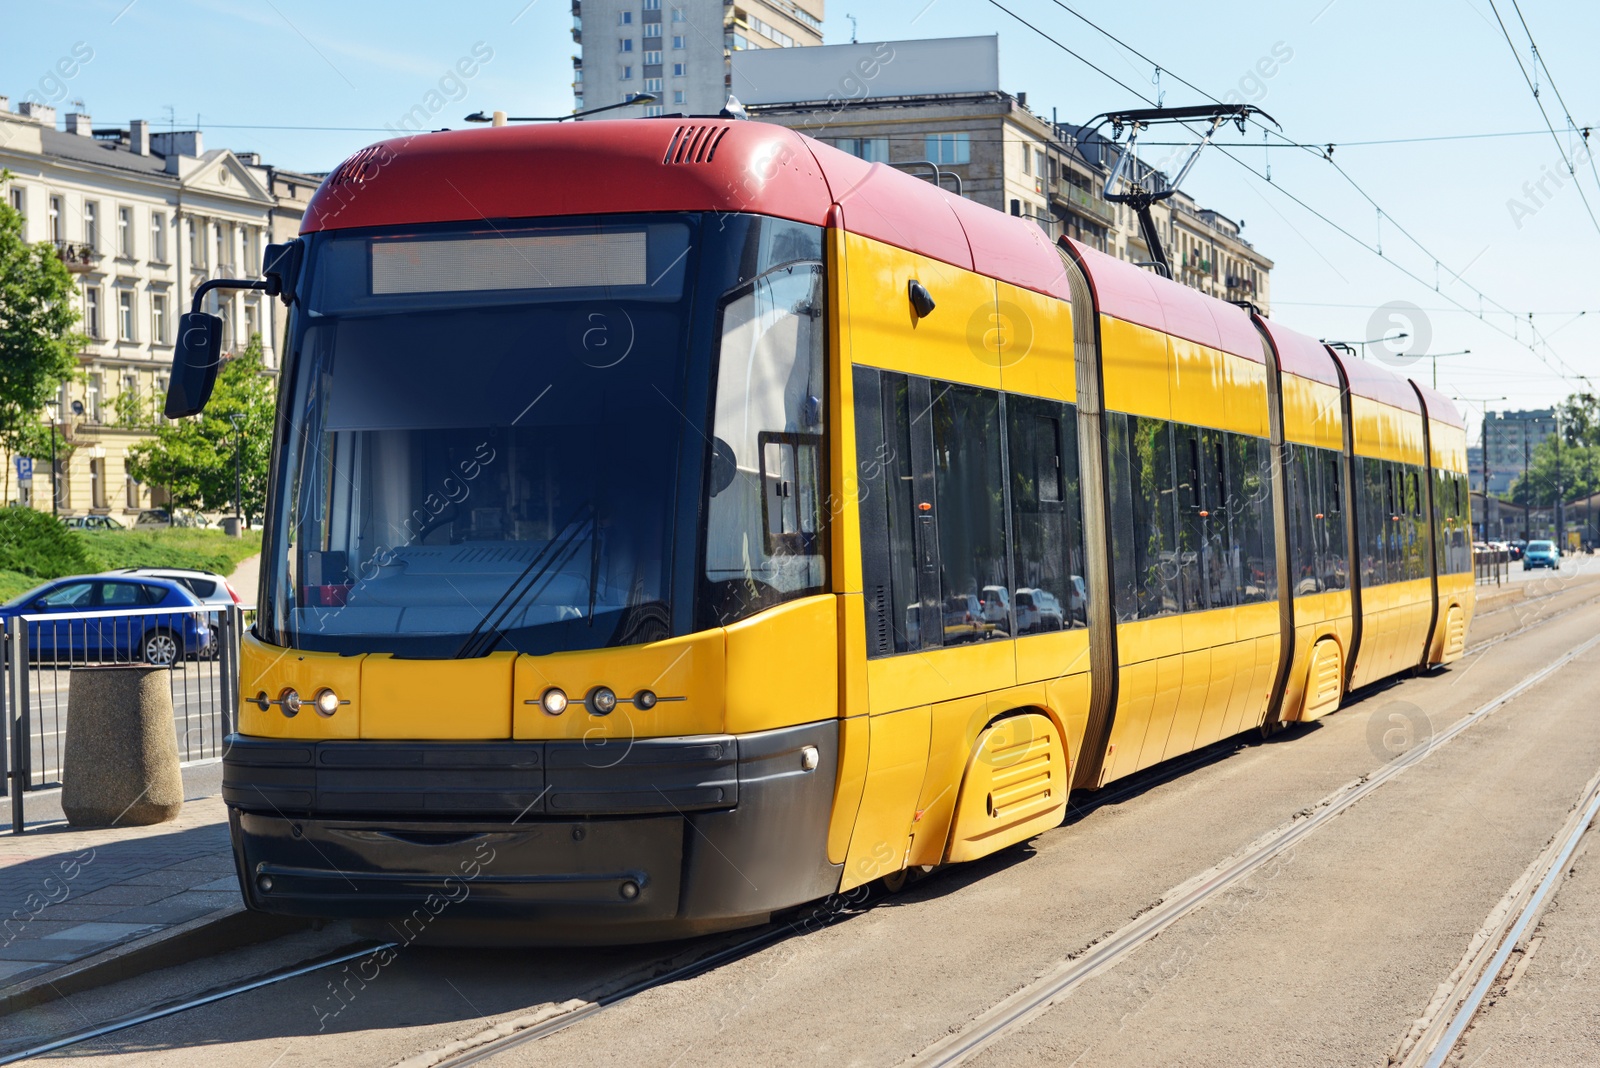 Photo of Modern yellow tram on railways in city